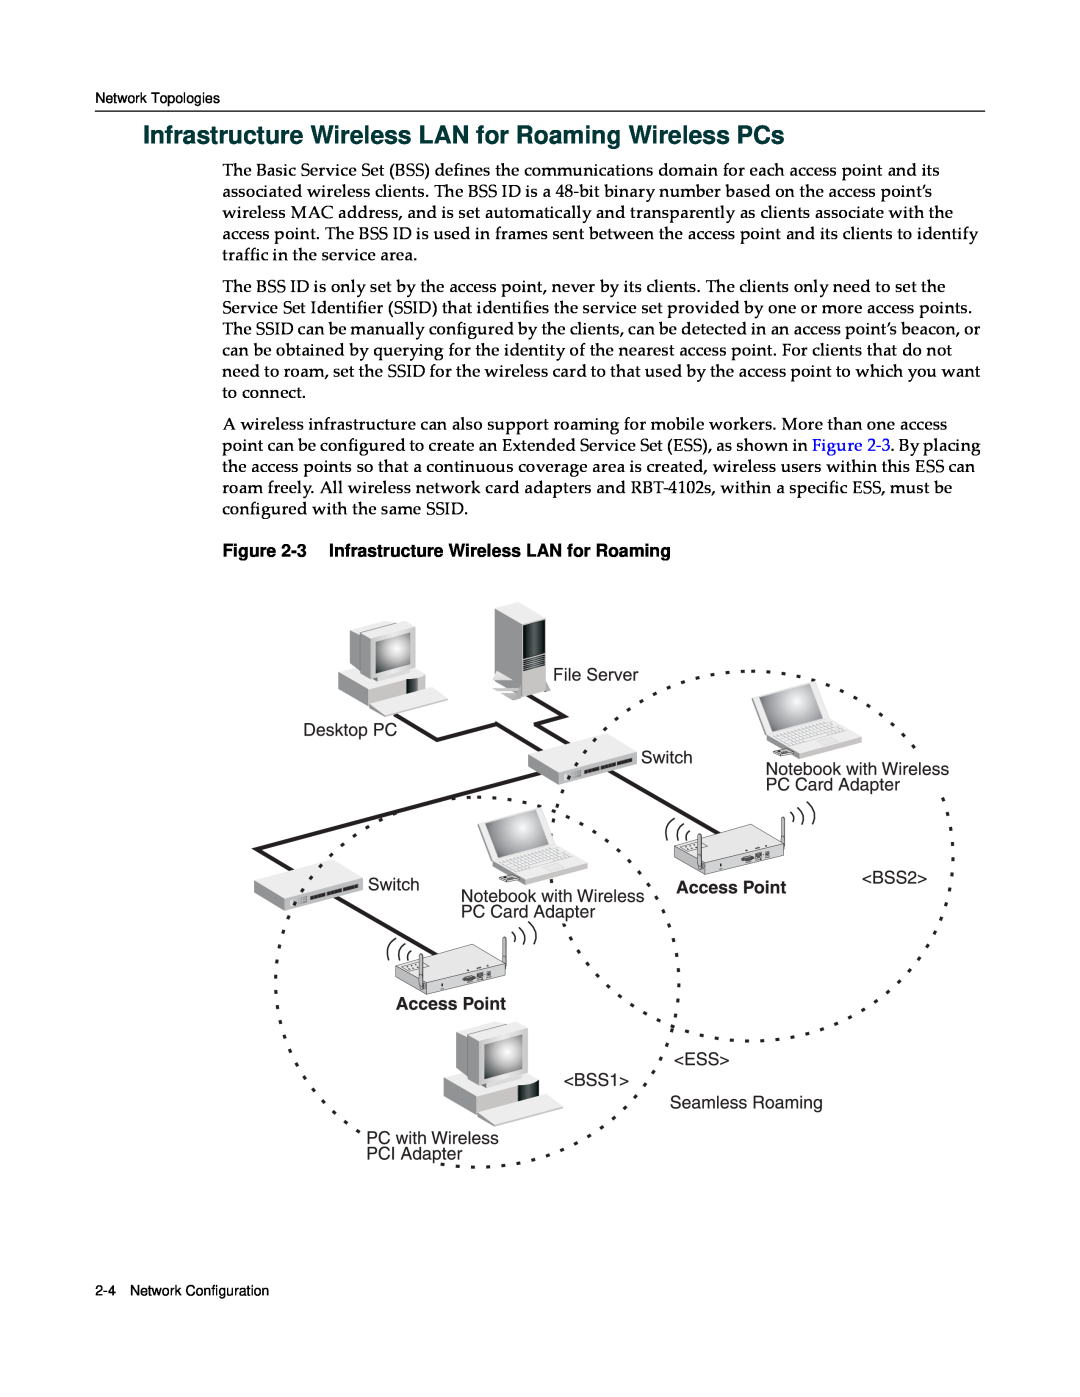 Enterasys Networks RBT-4102 manual Infrastructure Wireless LAN for Roaming Wireless PCs 